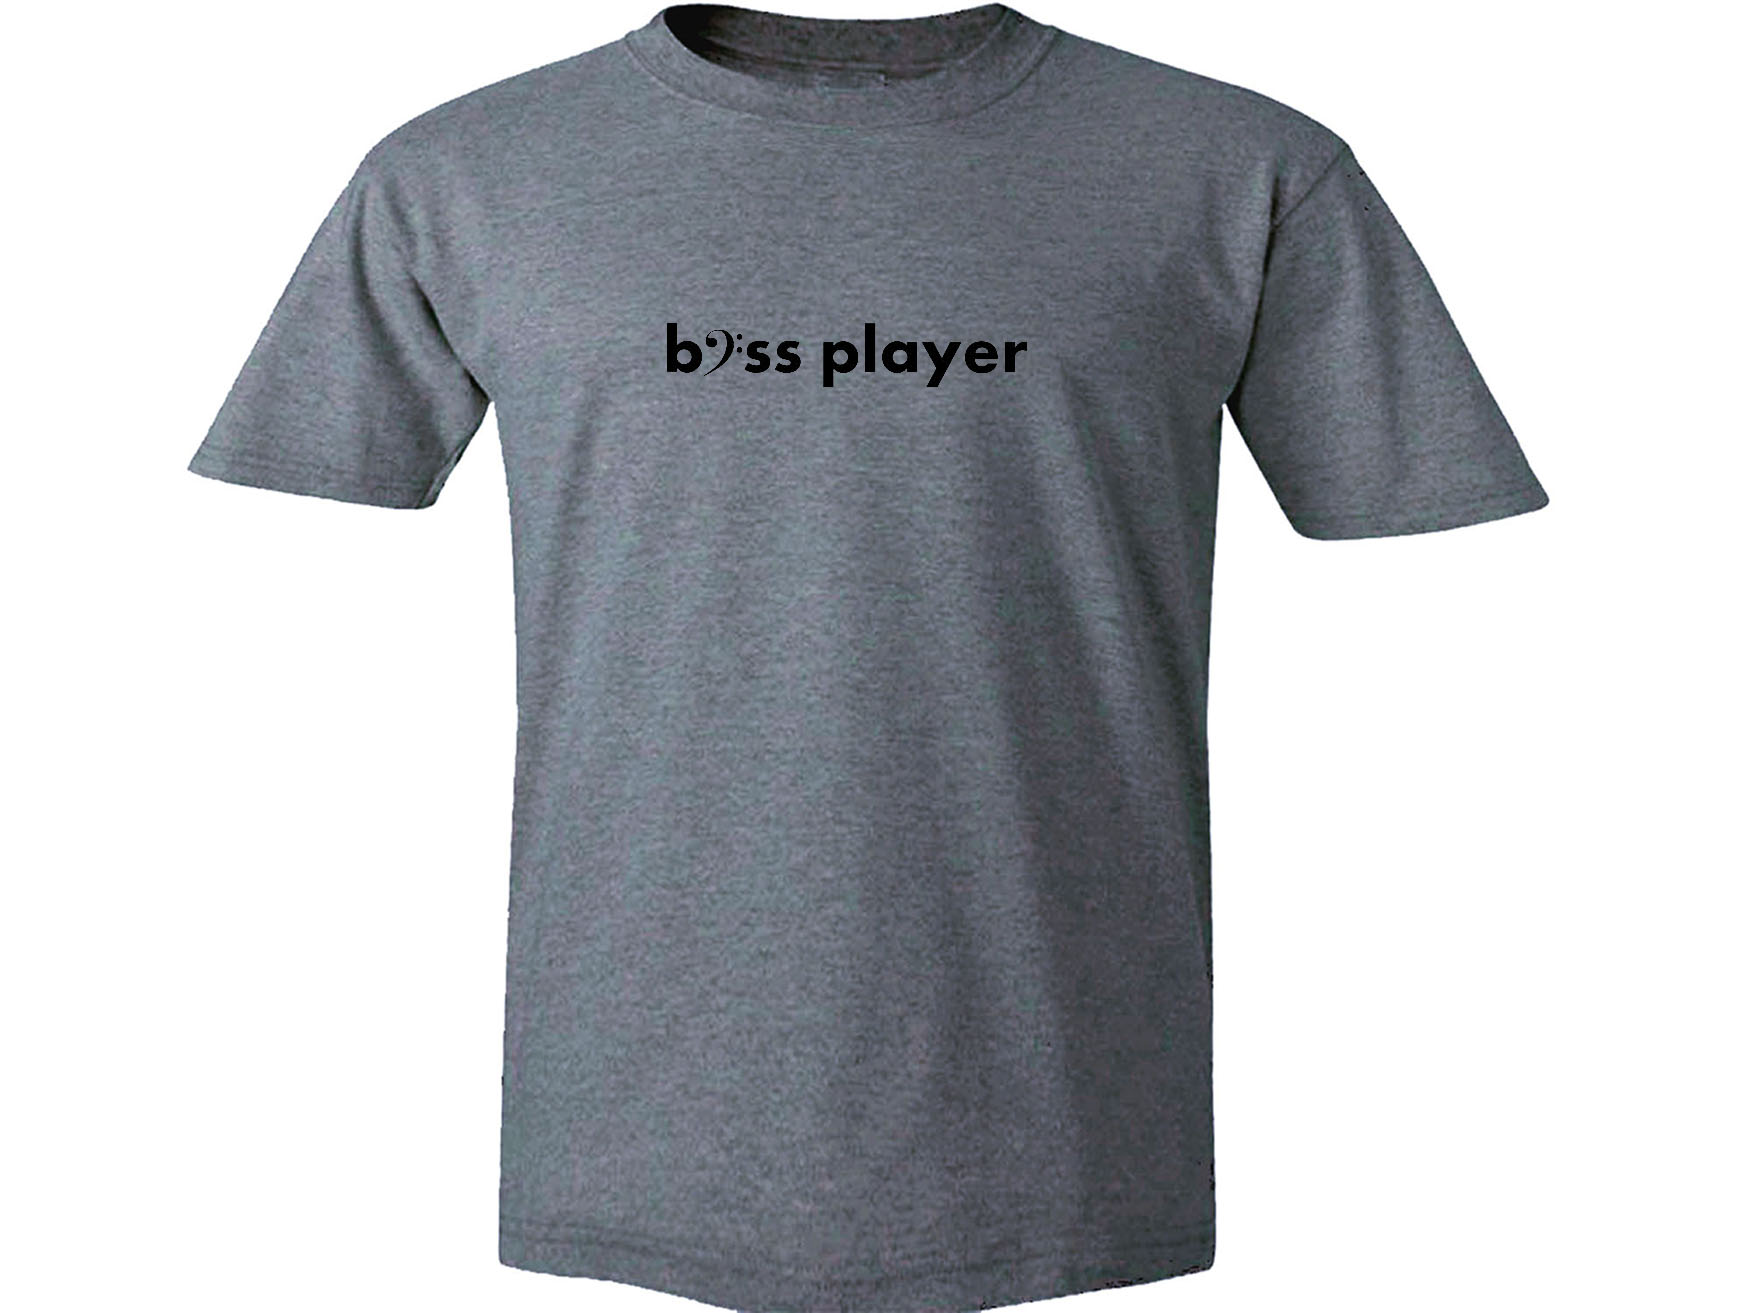 Bass player gray t-shirt great gift for guitarist